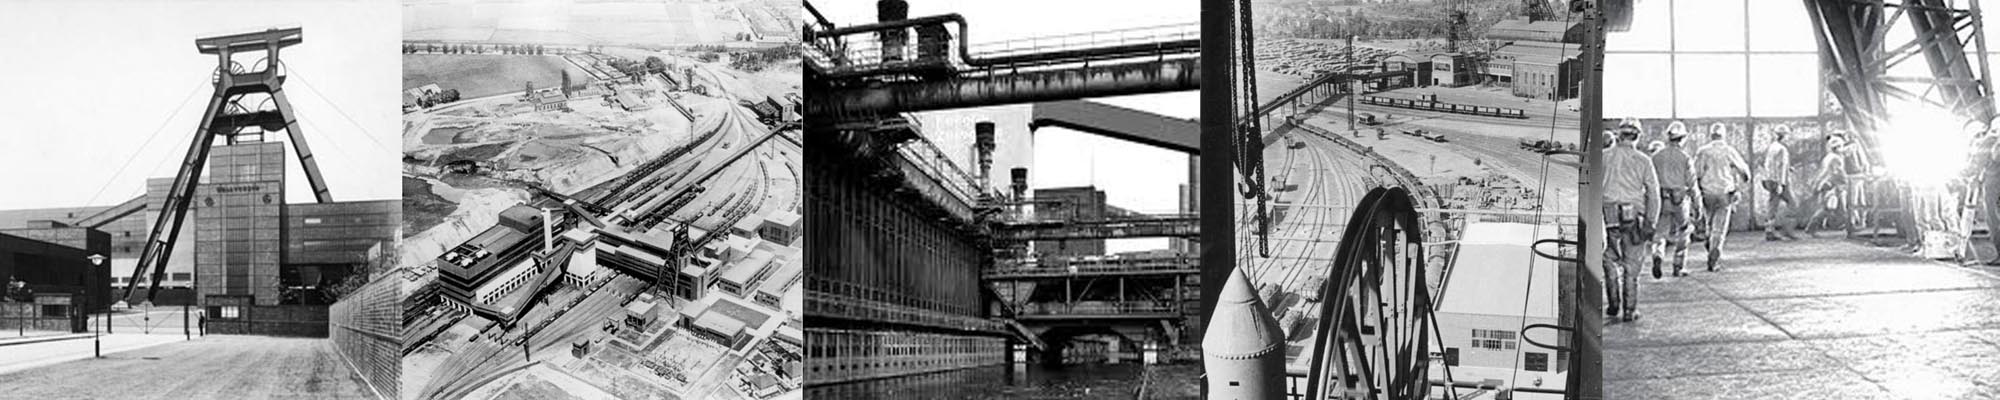 To μεταλλείο του Zollverein σε περίοδο λειτουργίας, © bdonline.co.uk/Wikipedia.org/historytrips.eu, επεξεργασία Χάρης Μούντης & Άντρια Βραχίμη